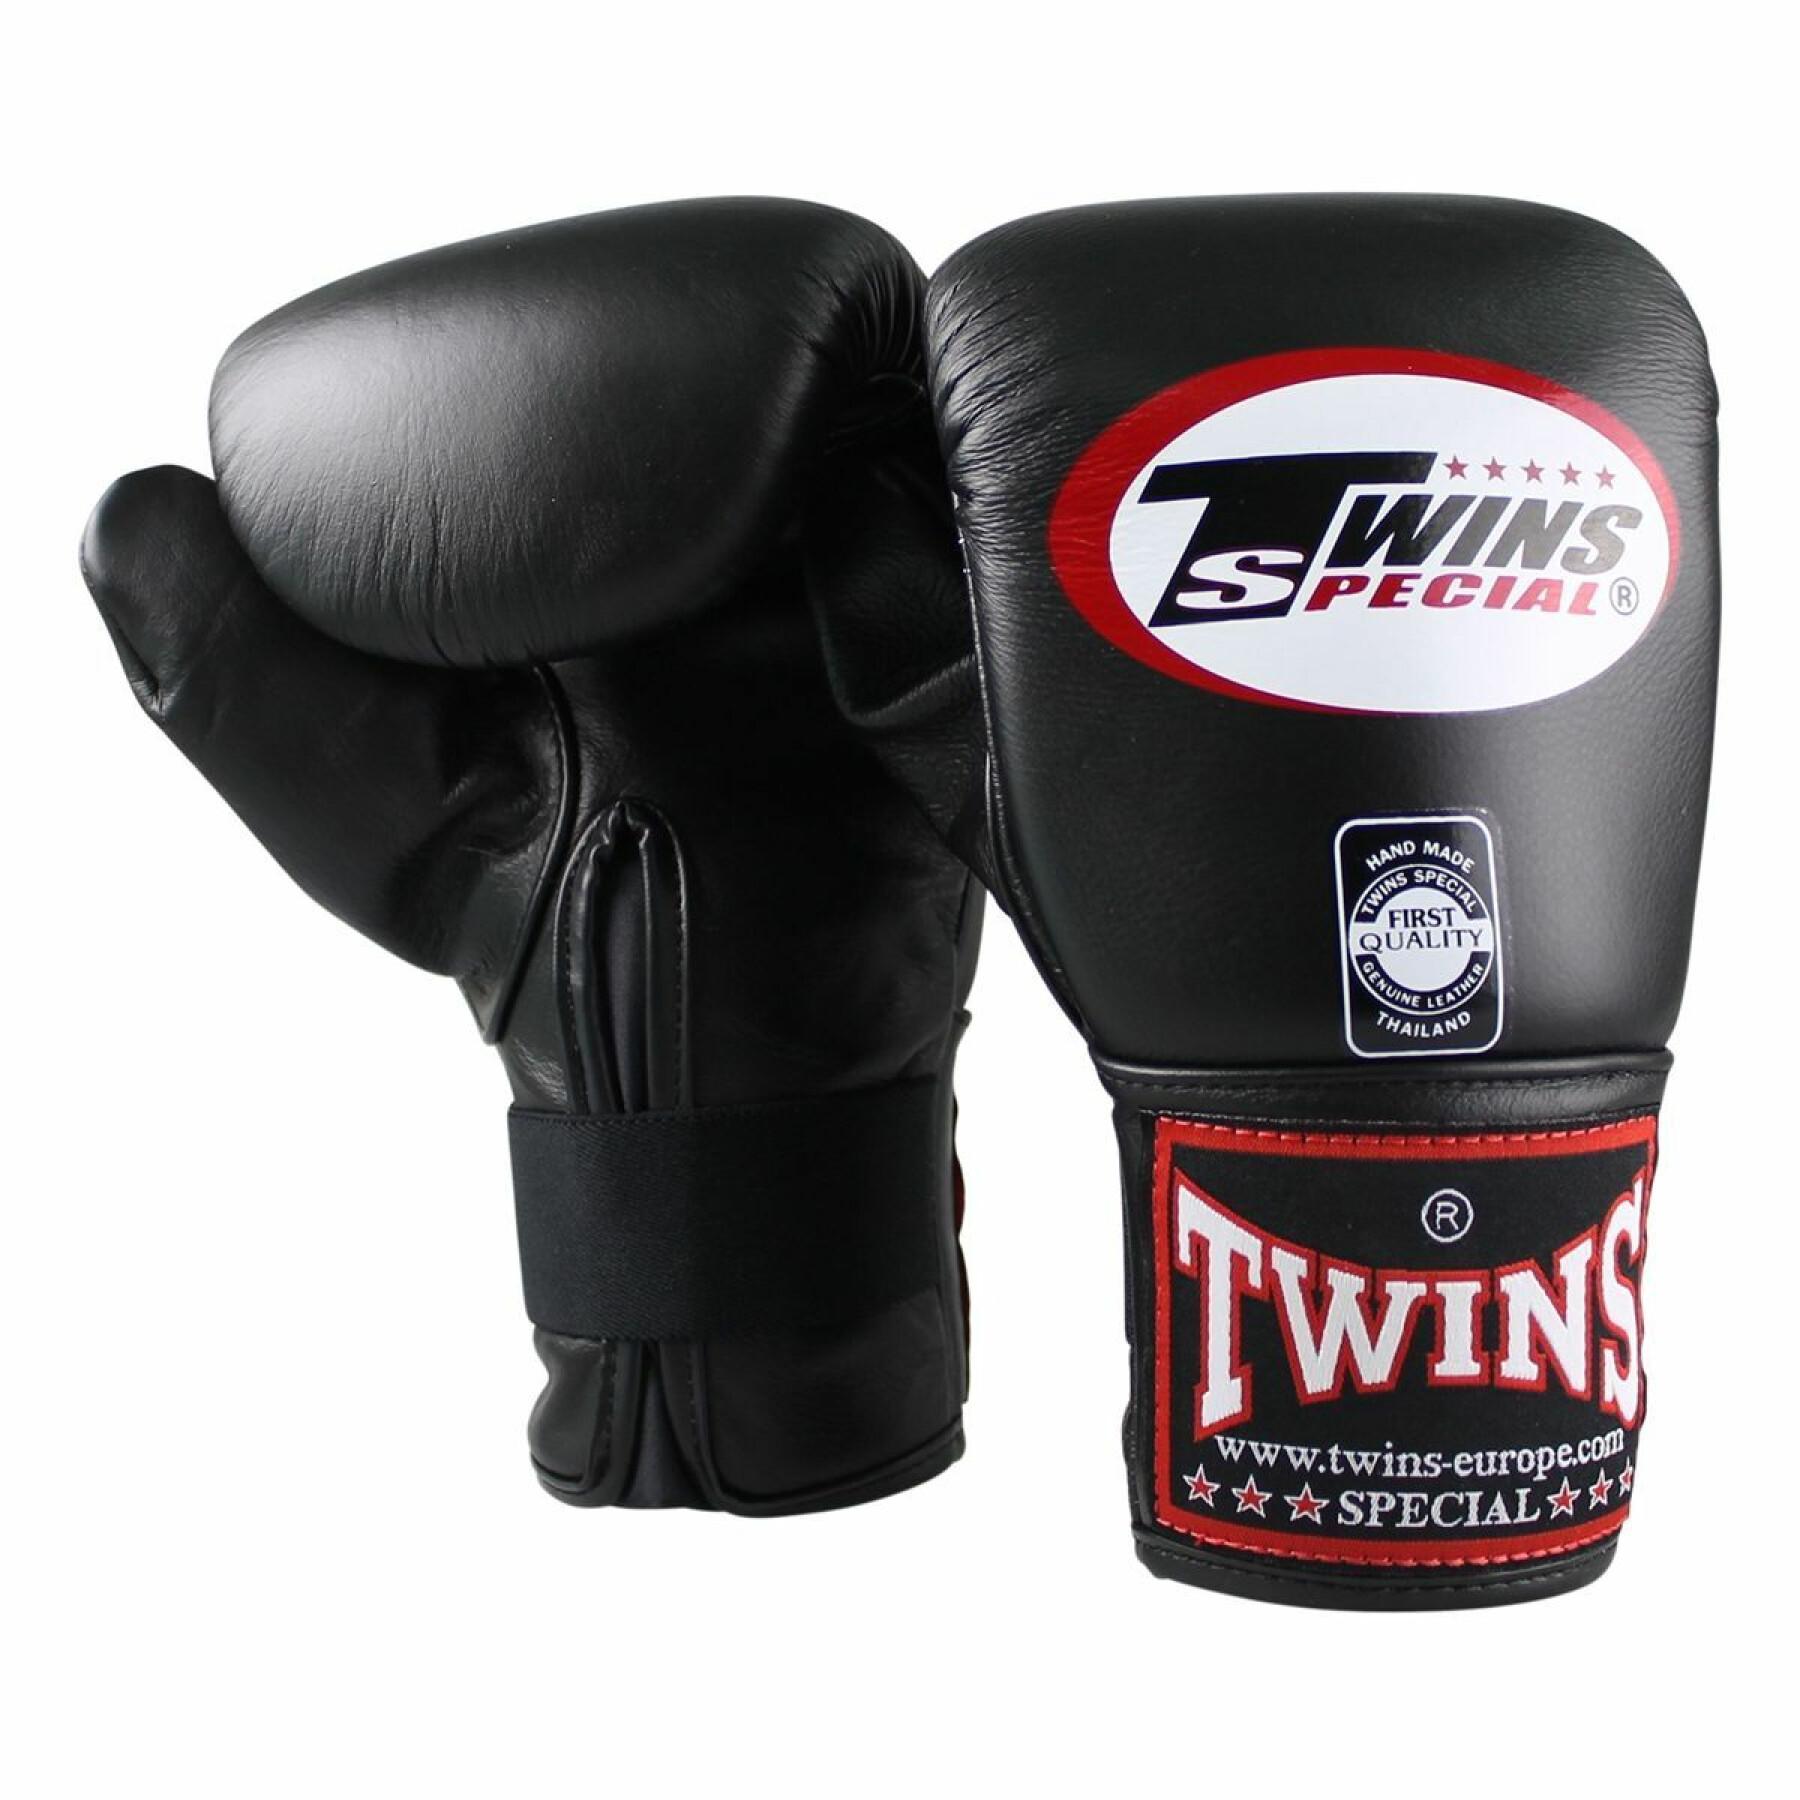 Buy Pure2Improve Equipment, Boxing Fitness Equipment